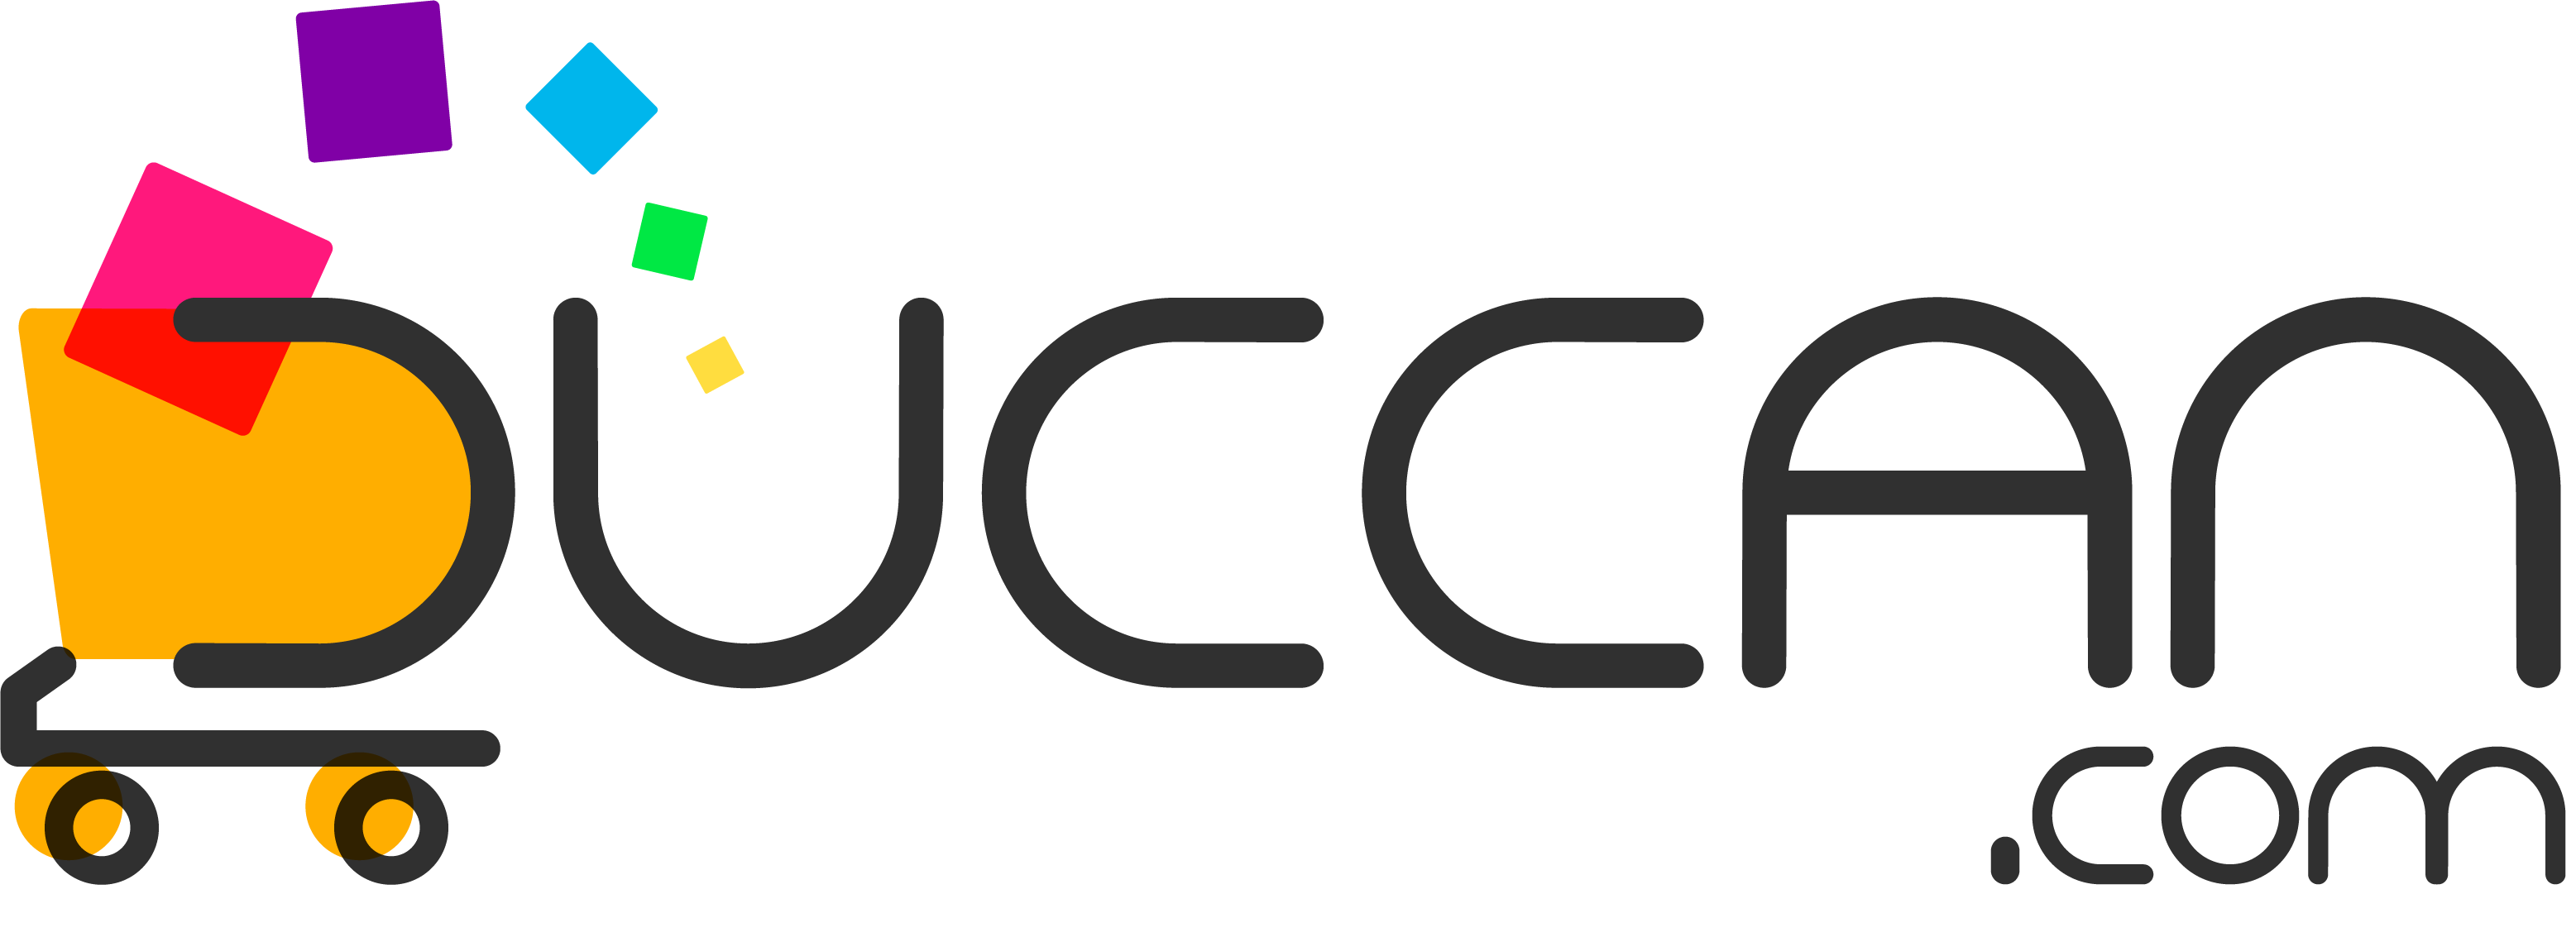 duccan-logo